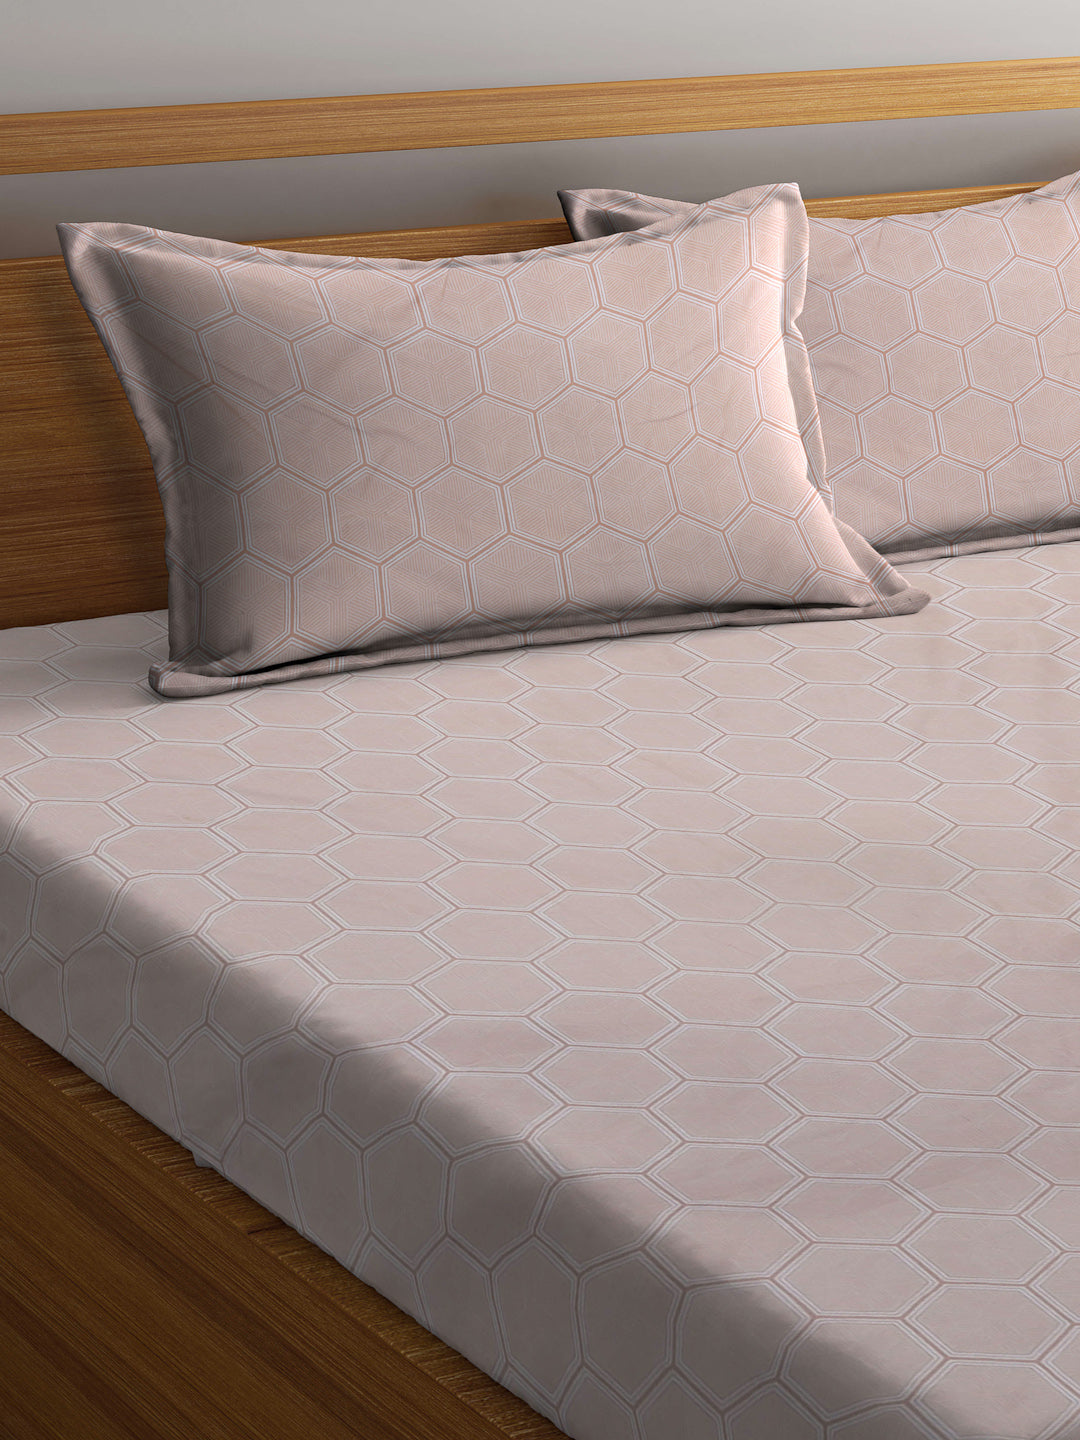 Arrabi Peach Geometric TC Cotton Blend King Size Bookfold Bedsheet with 2 Pillow Covers (250 X 215 cm)